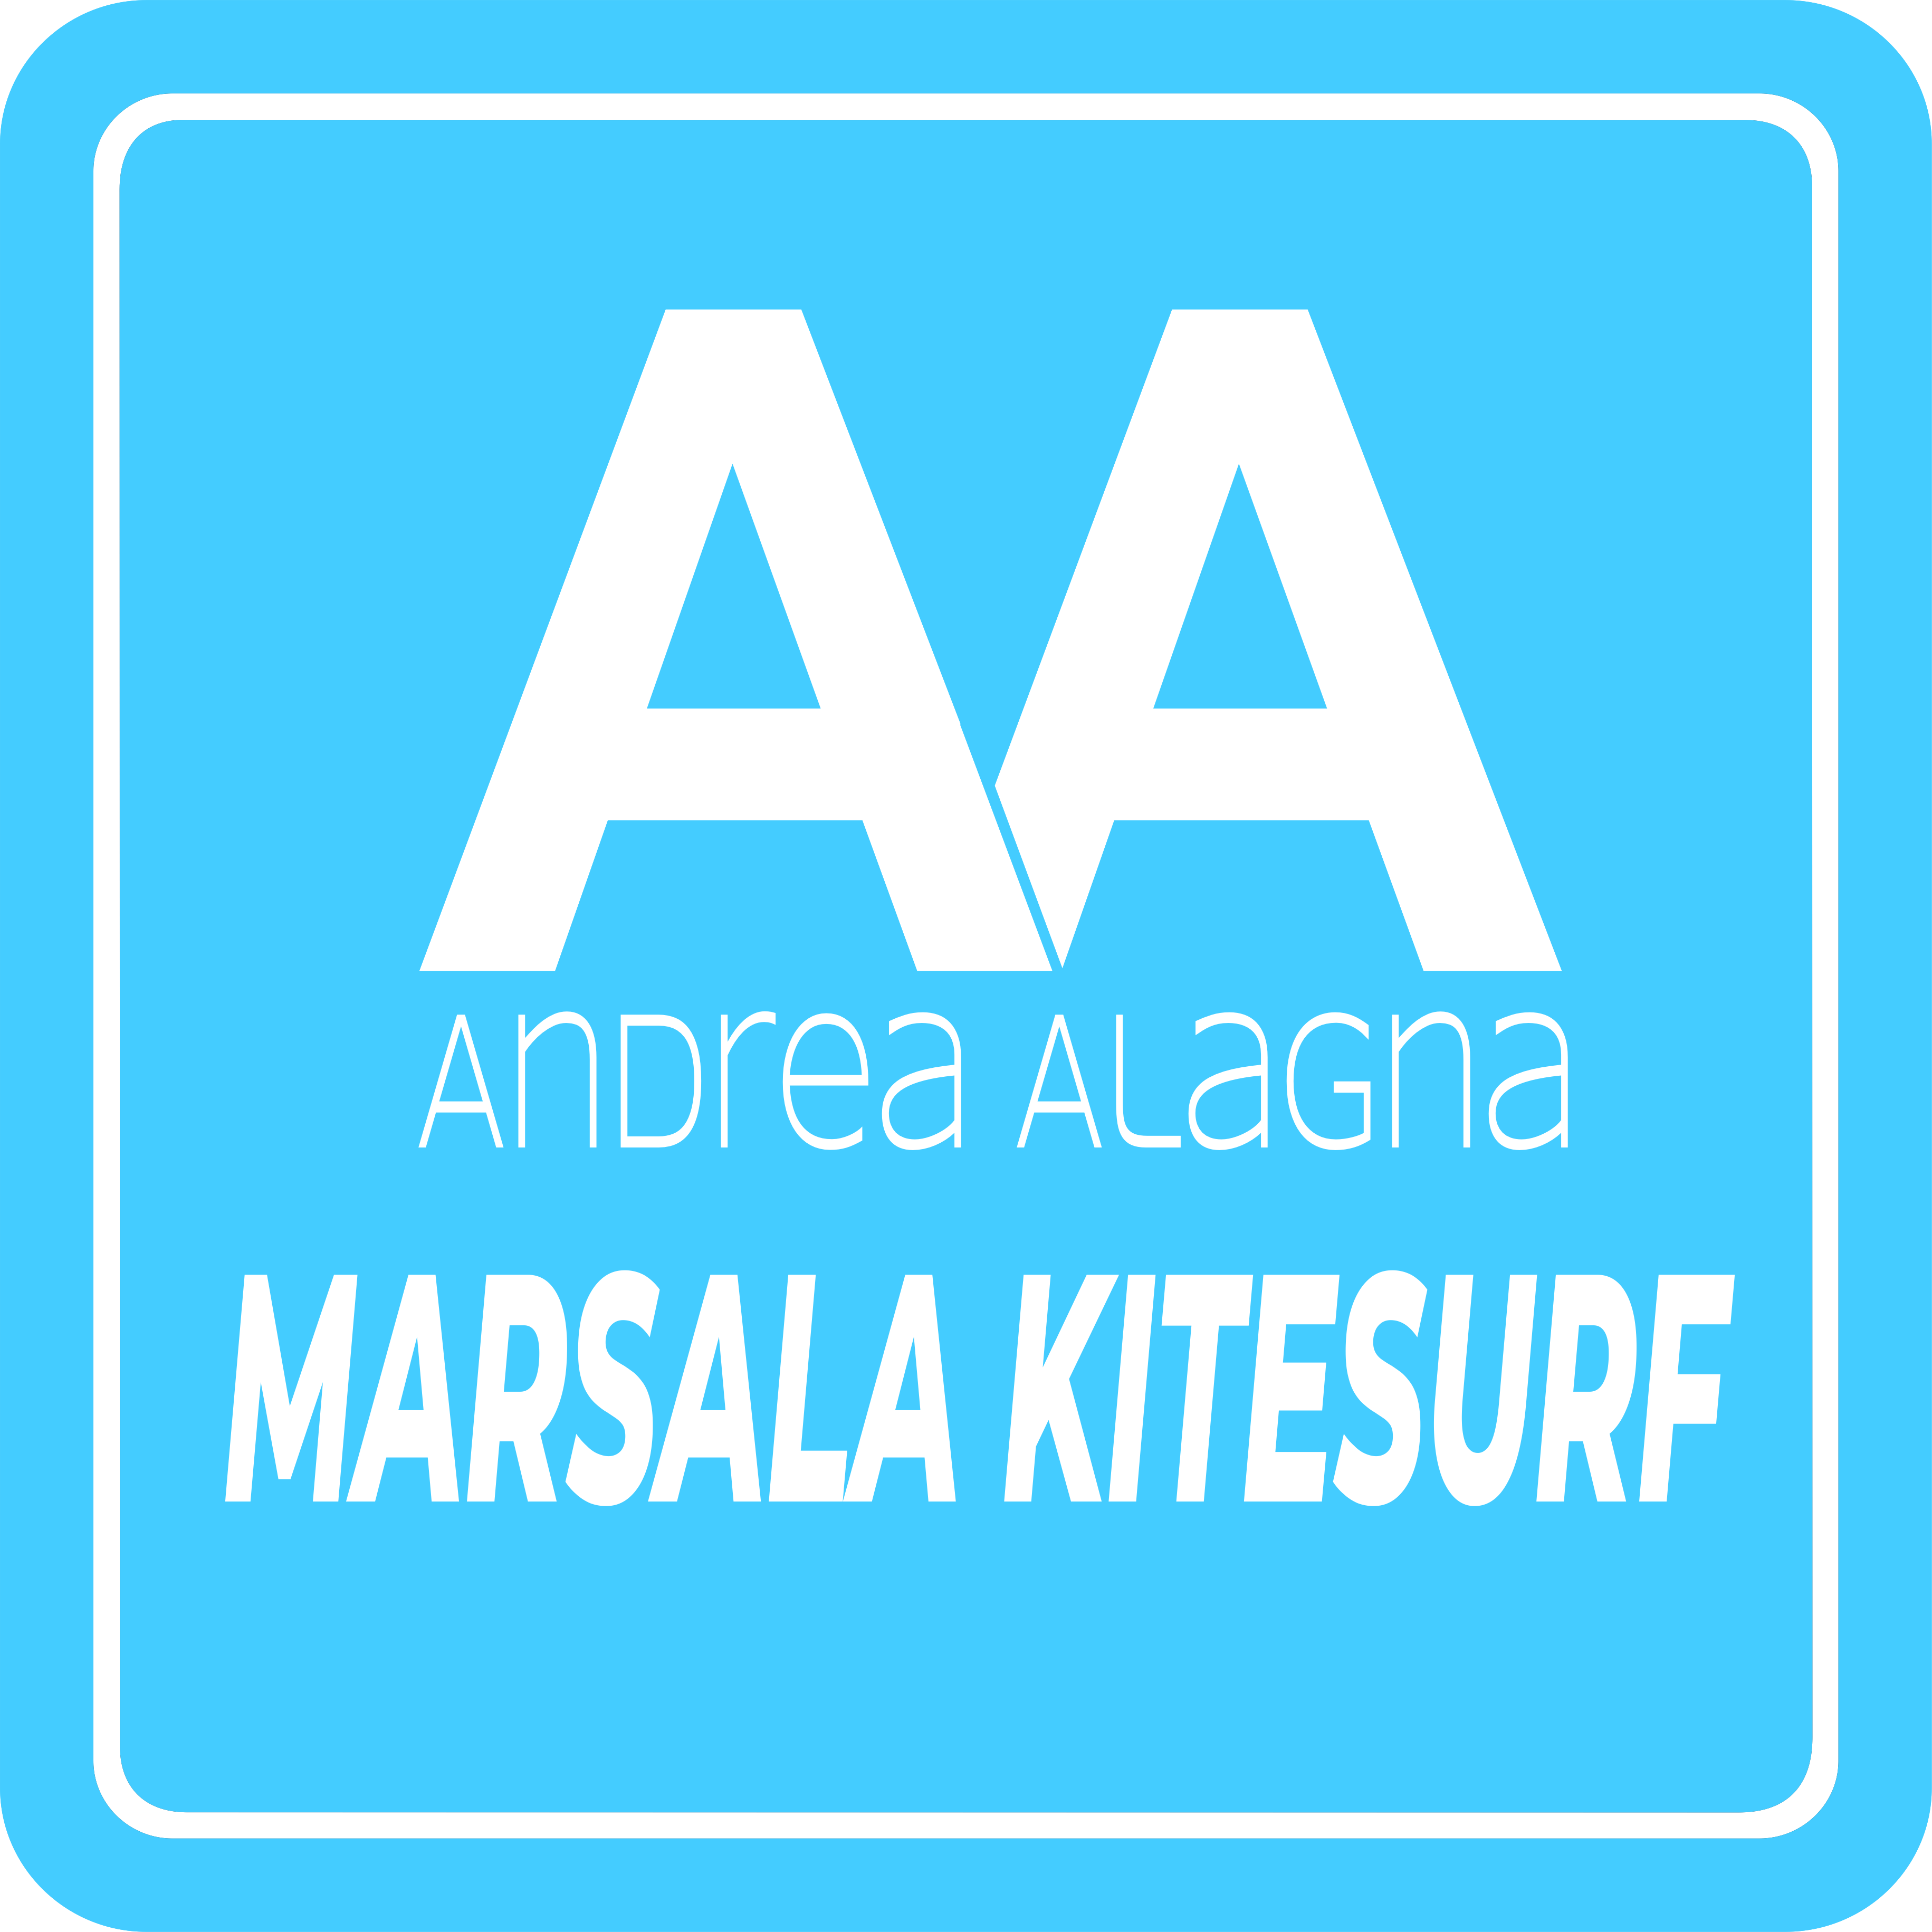 Marsala Kitesurf | La Scuola Kitesurf dello Stagnone di Marsala: Corsi Kitesurf e Noleggio Kitesurf